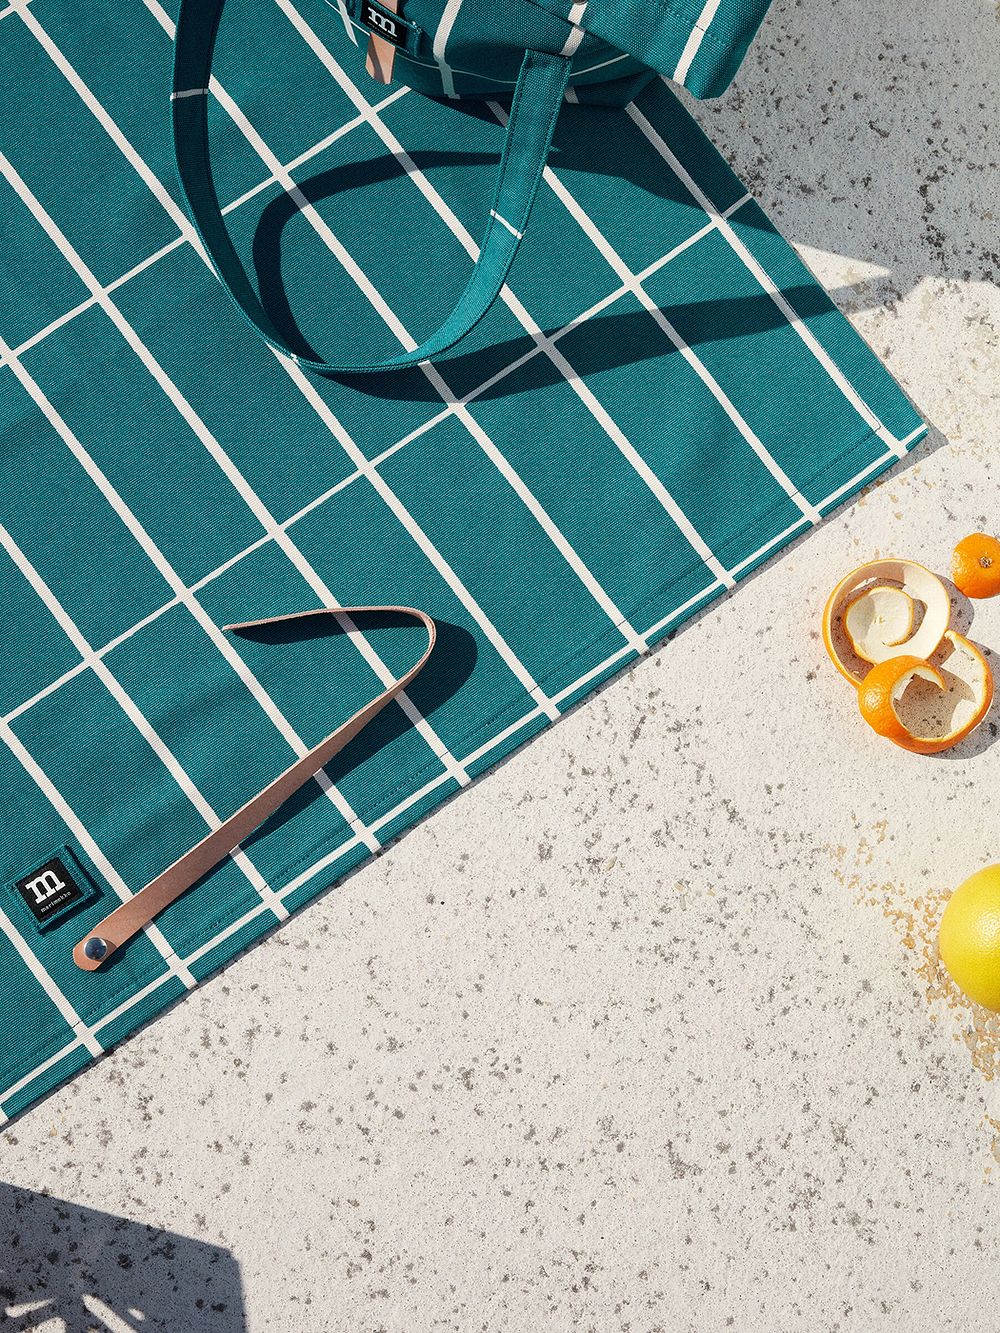 Marimekko's Tiiliskivi picnic mat 